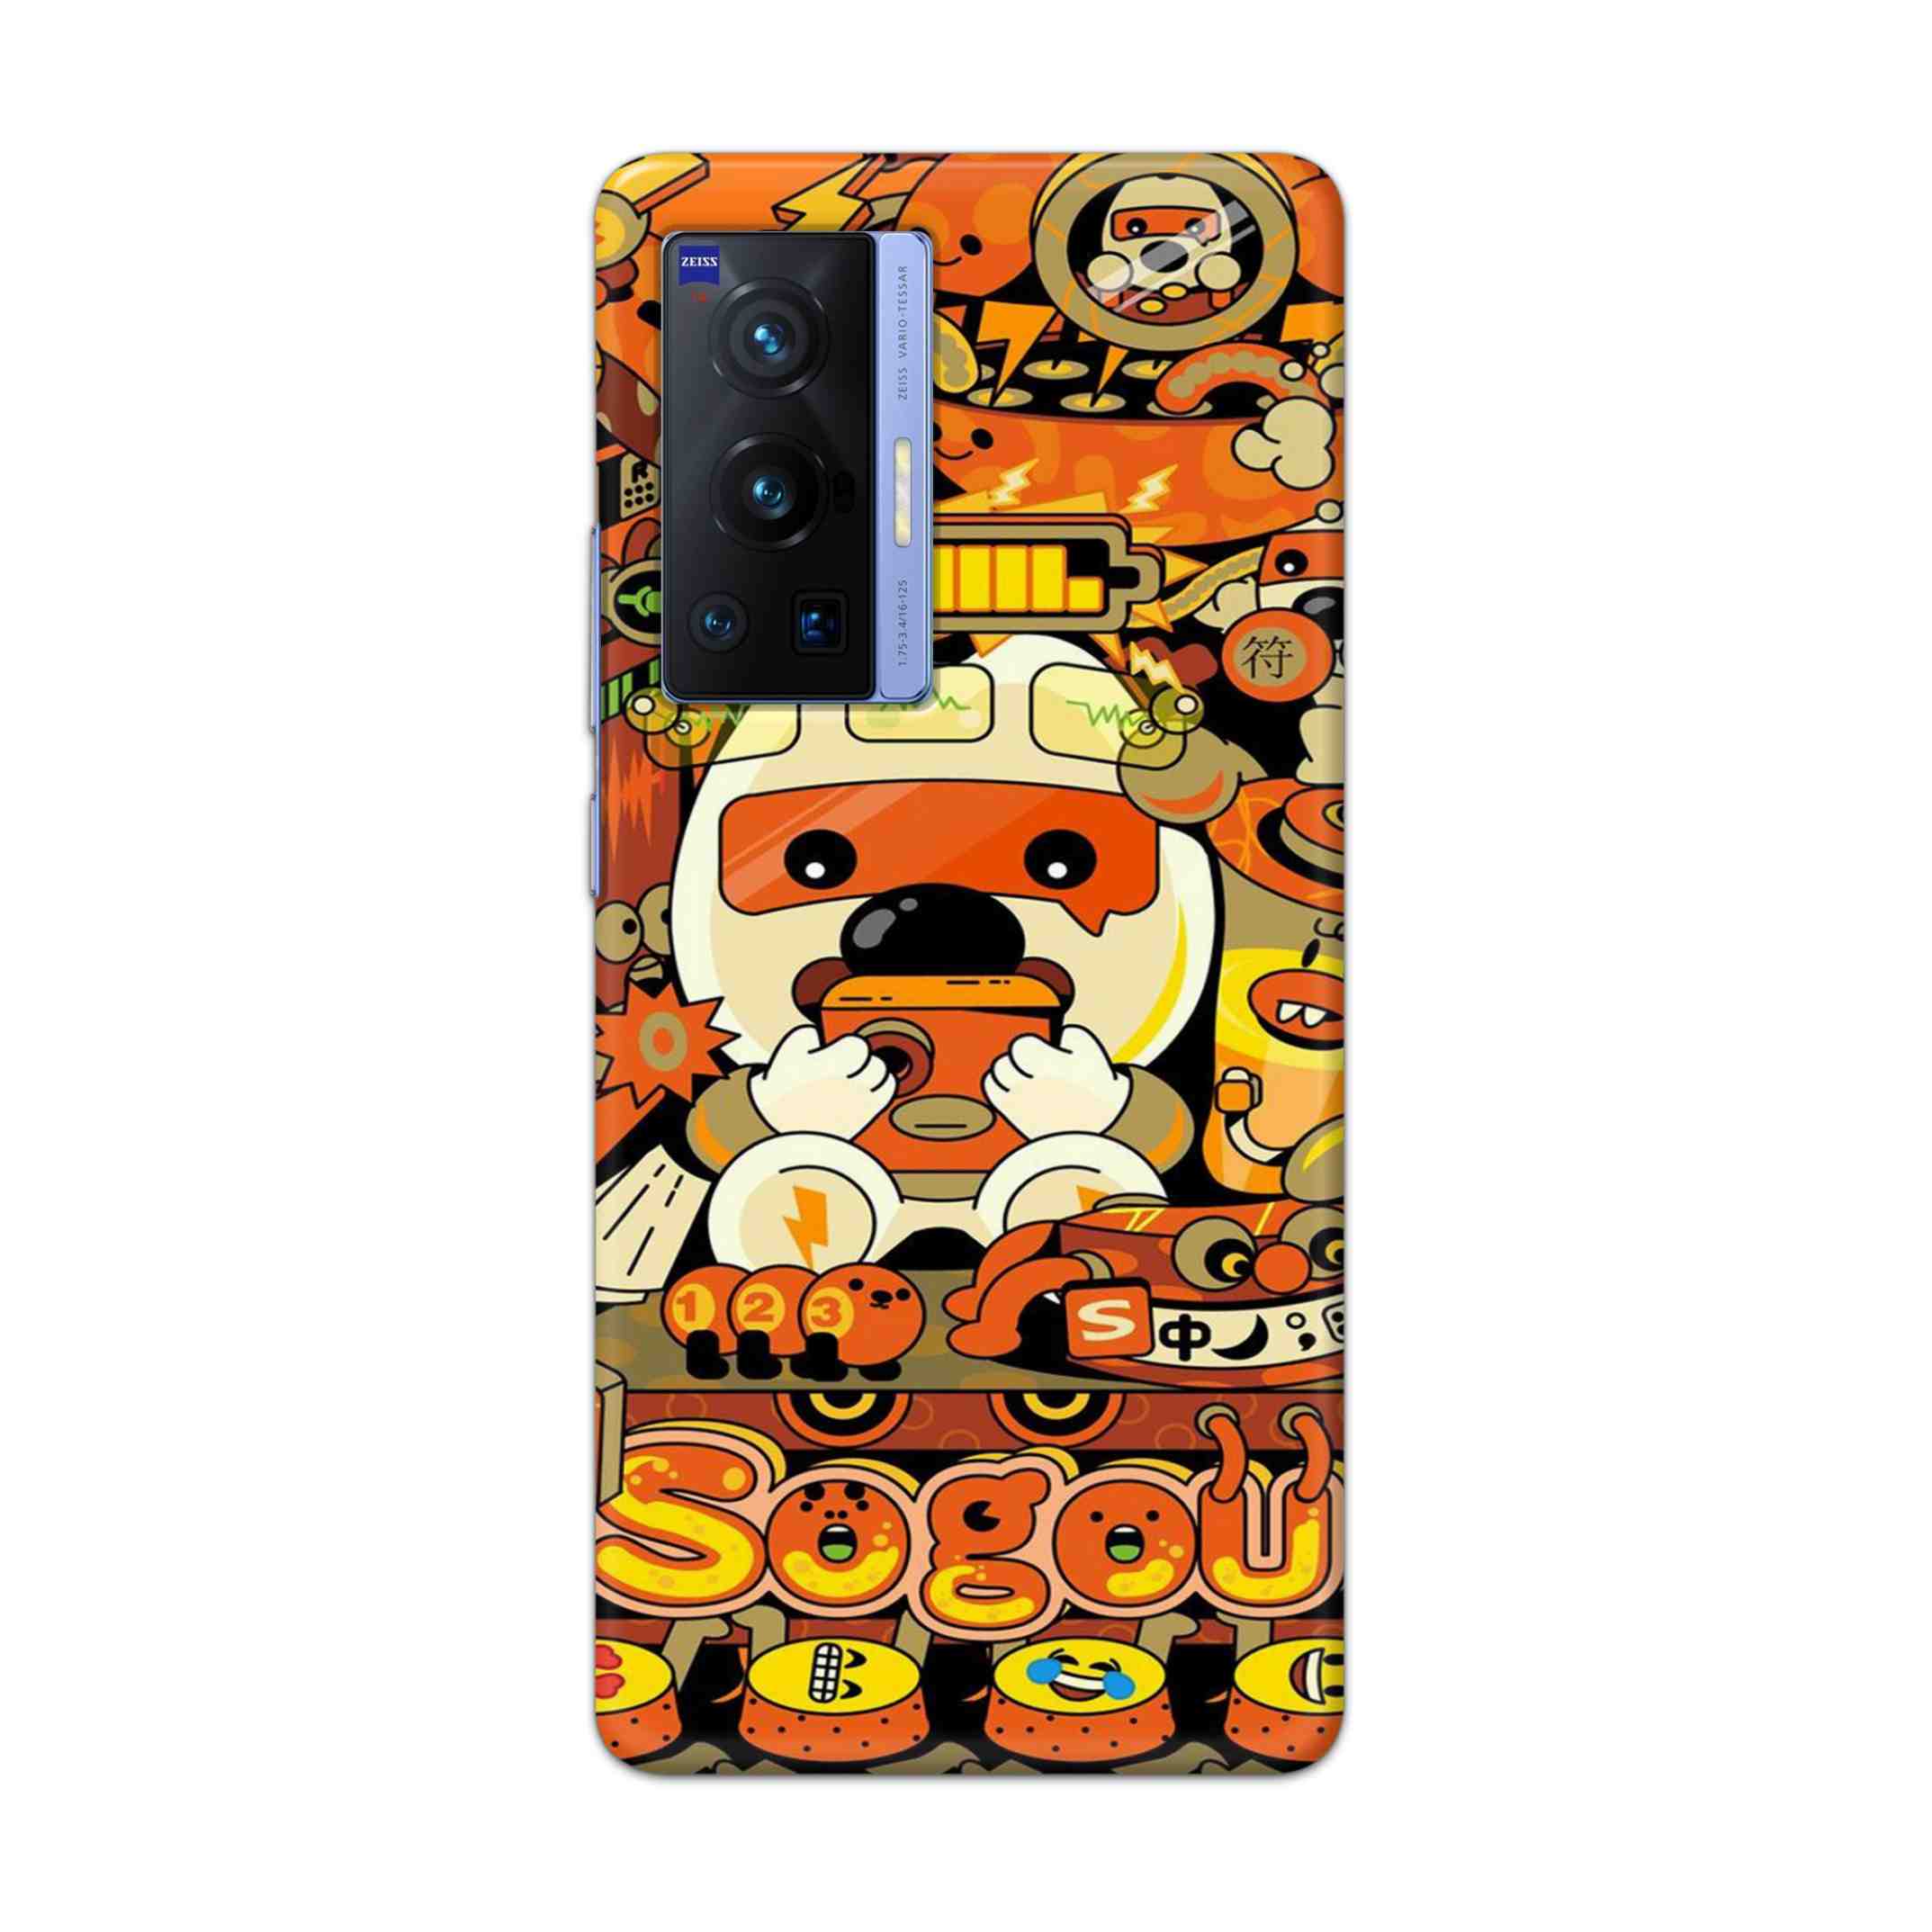 Buy Sogou Hard Back Mobile Phone Case Cover For Vivo X70 Pro Online